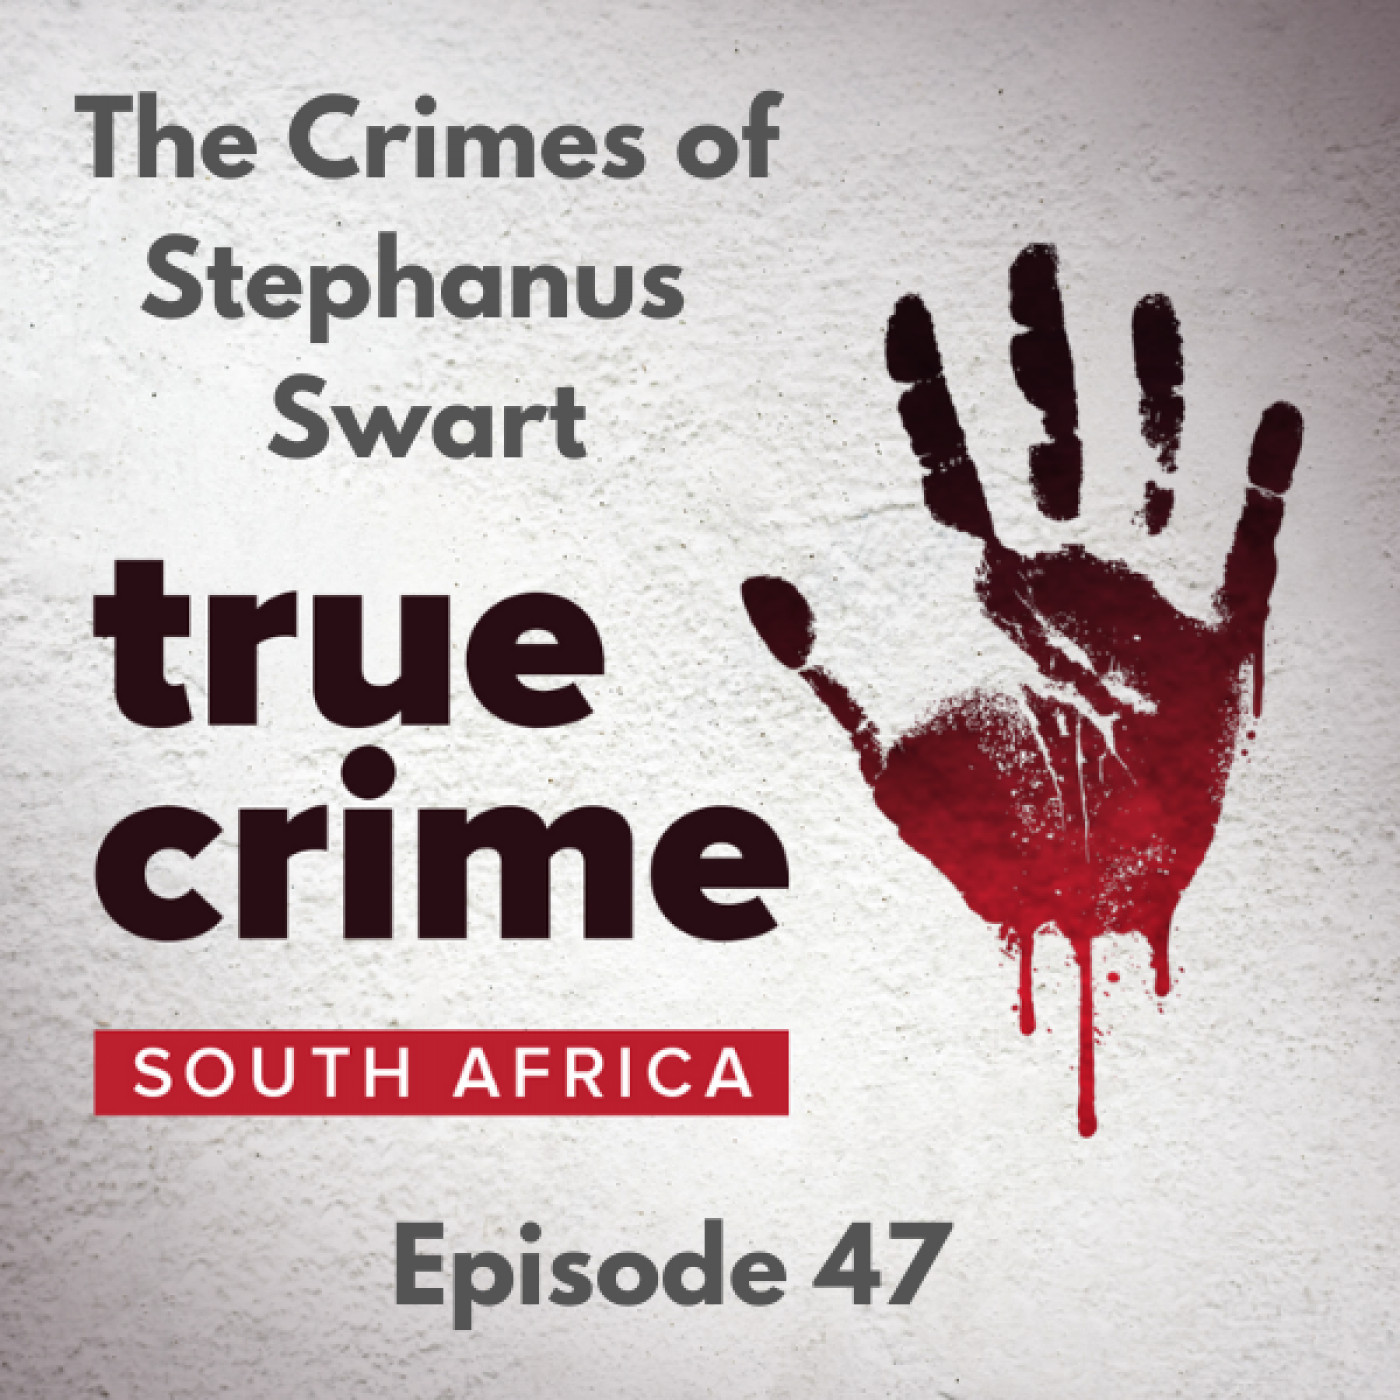 Episode 47 - The Crimes of Stephanus Swart